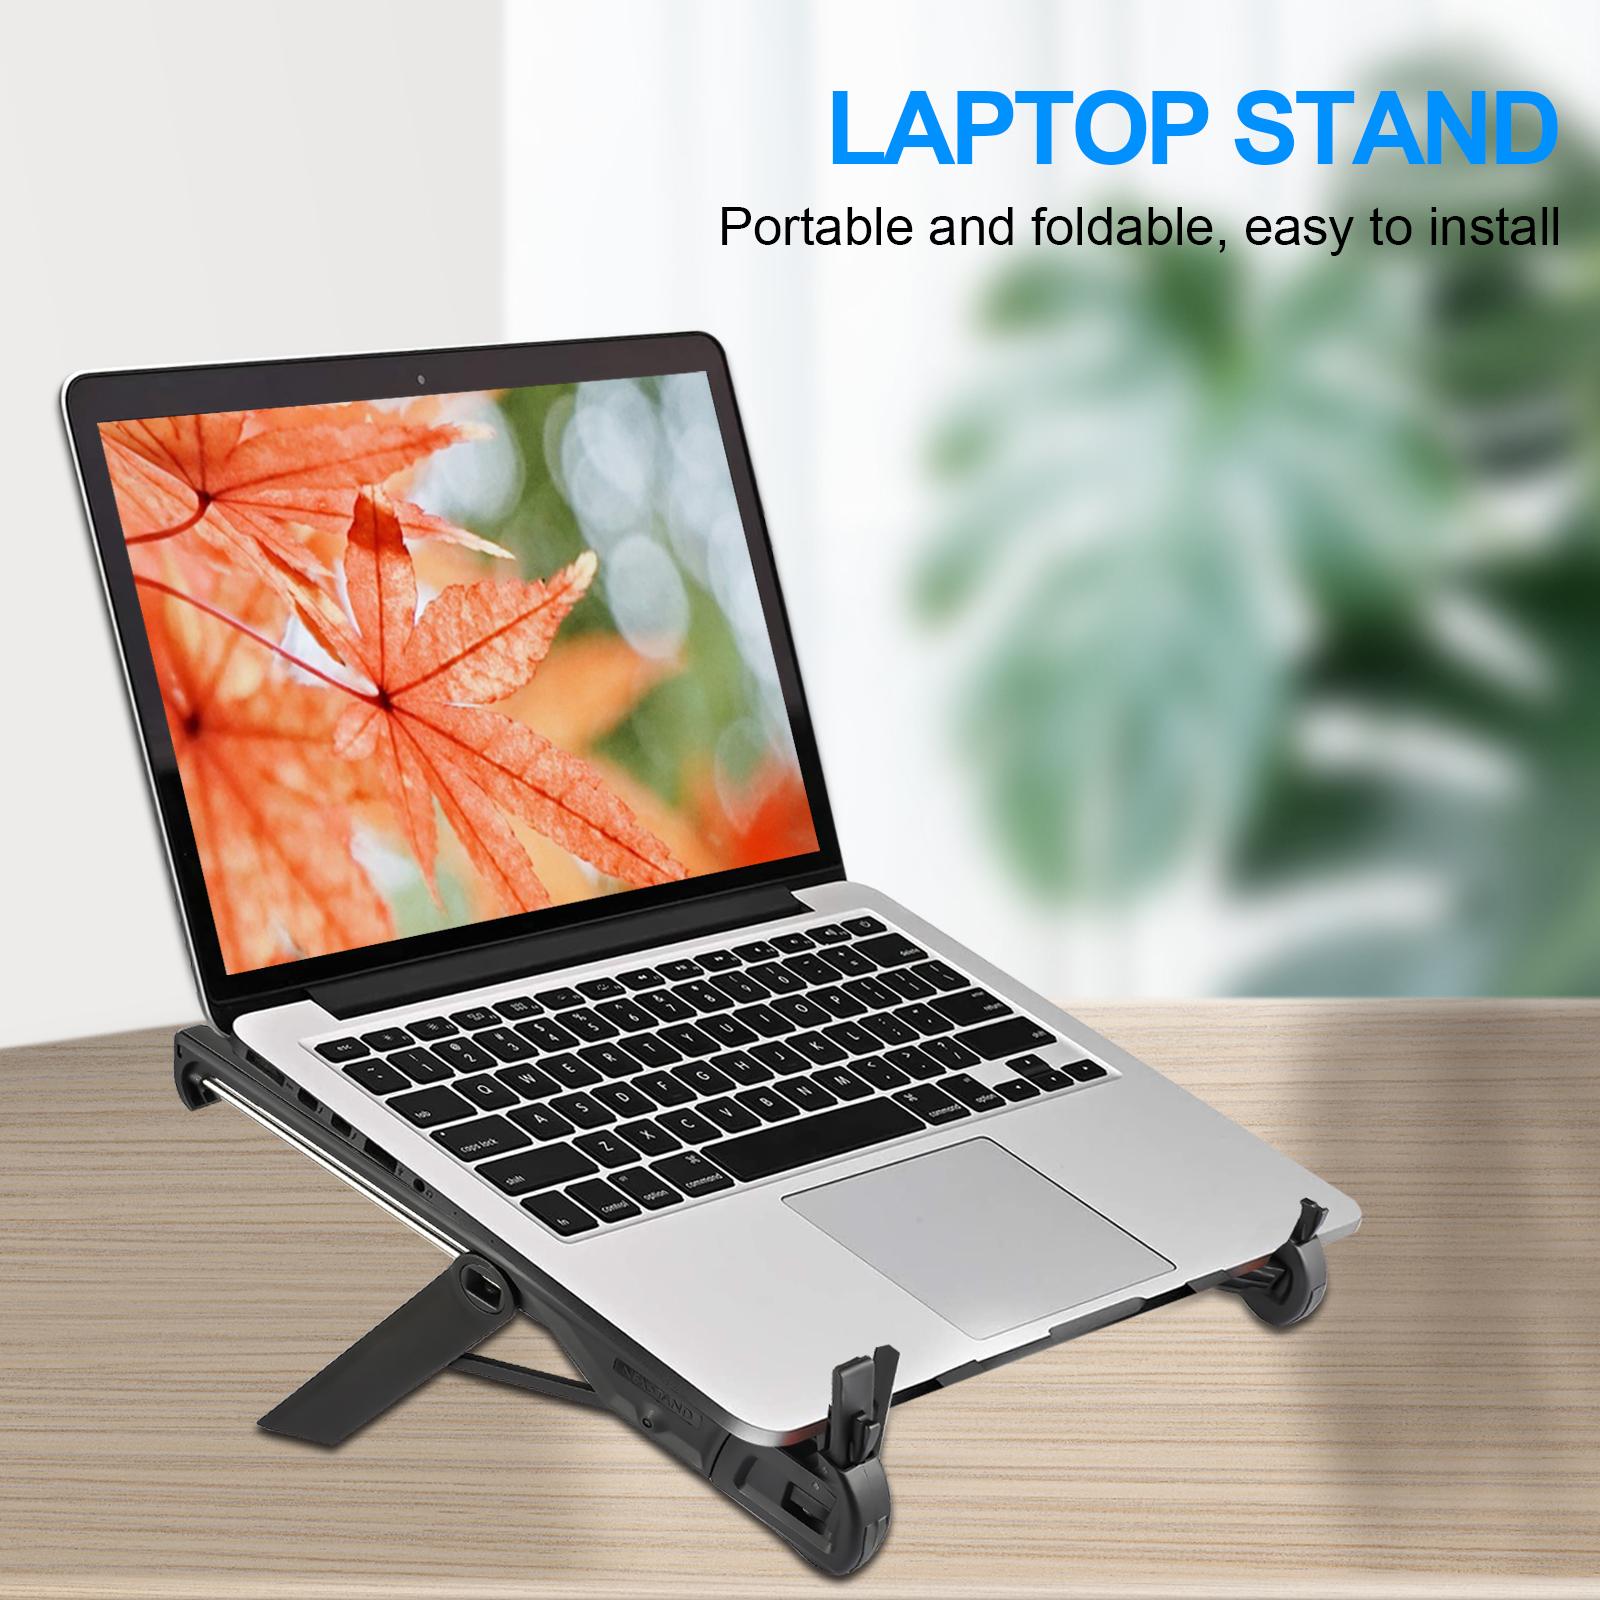 EEEkit Universal Laptop Stand with Height Adjustment, Ventilated Desktop Holder Supports iPad, Tablet, MacBook, Black - image 2 of 9